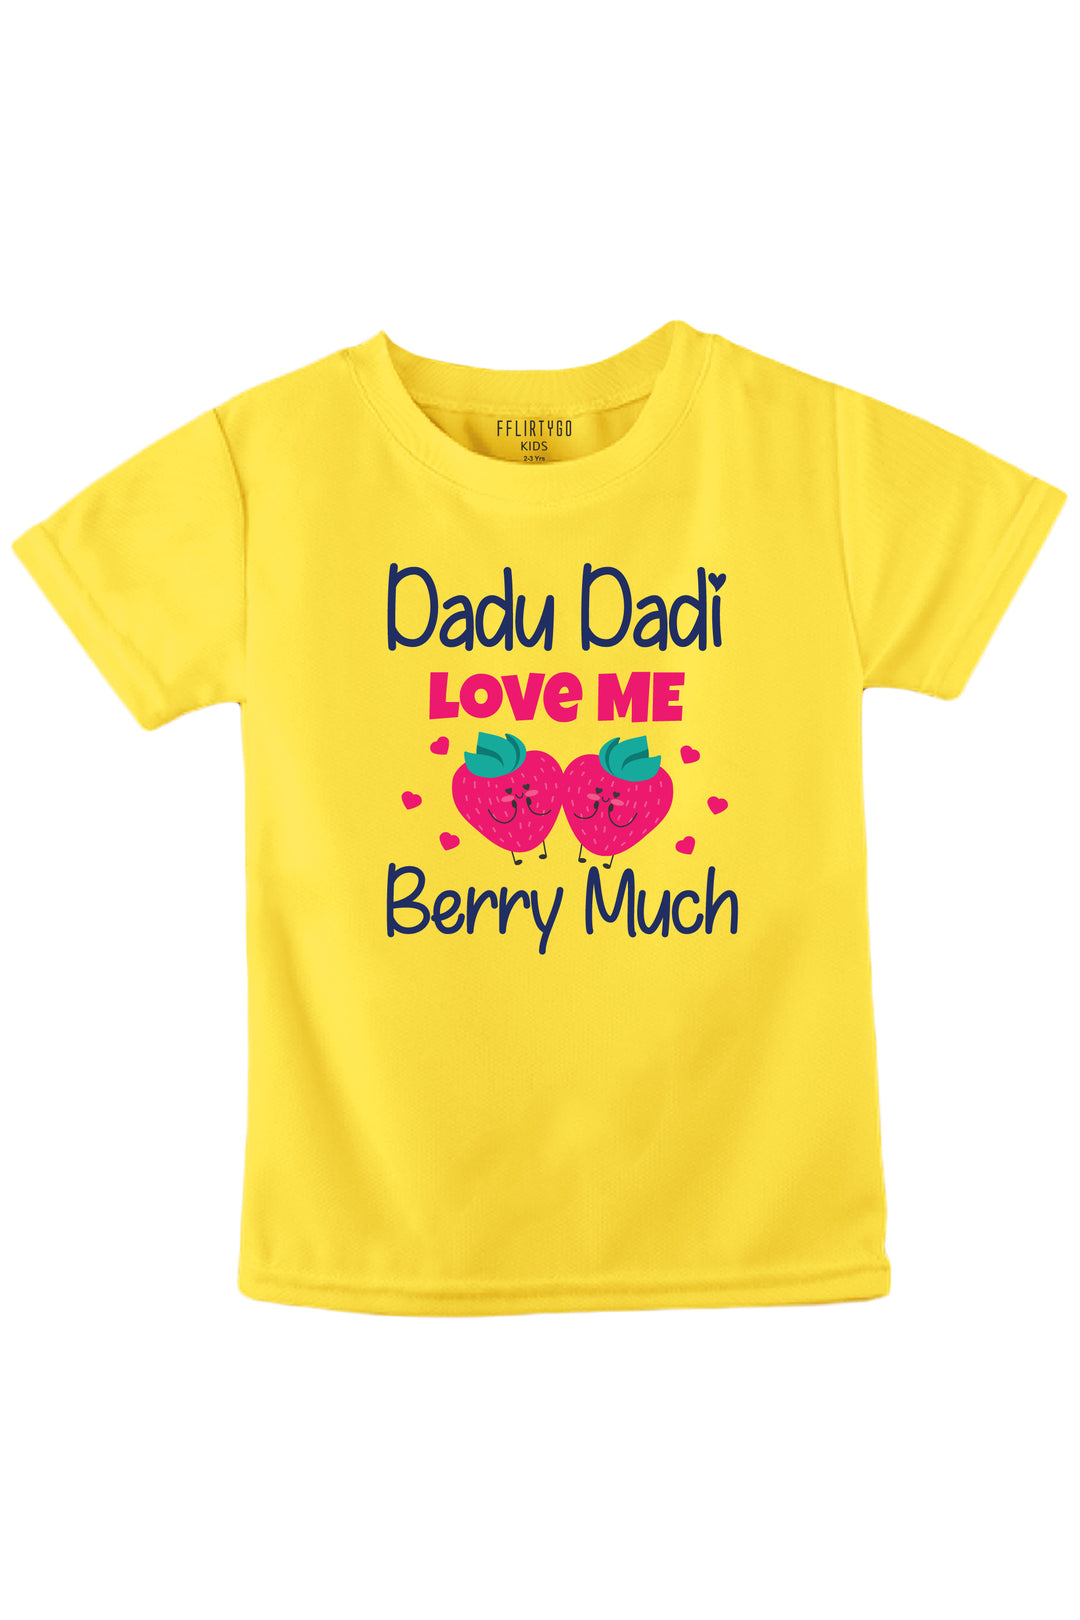 Dadu Dadi Love Me Berry Much